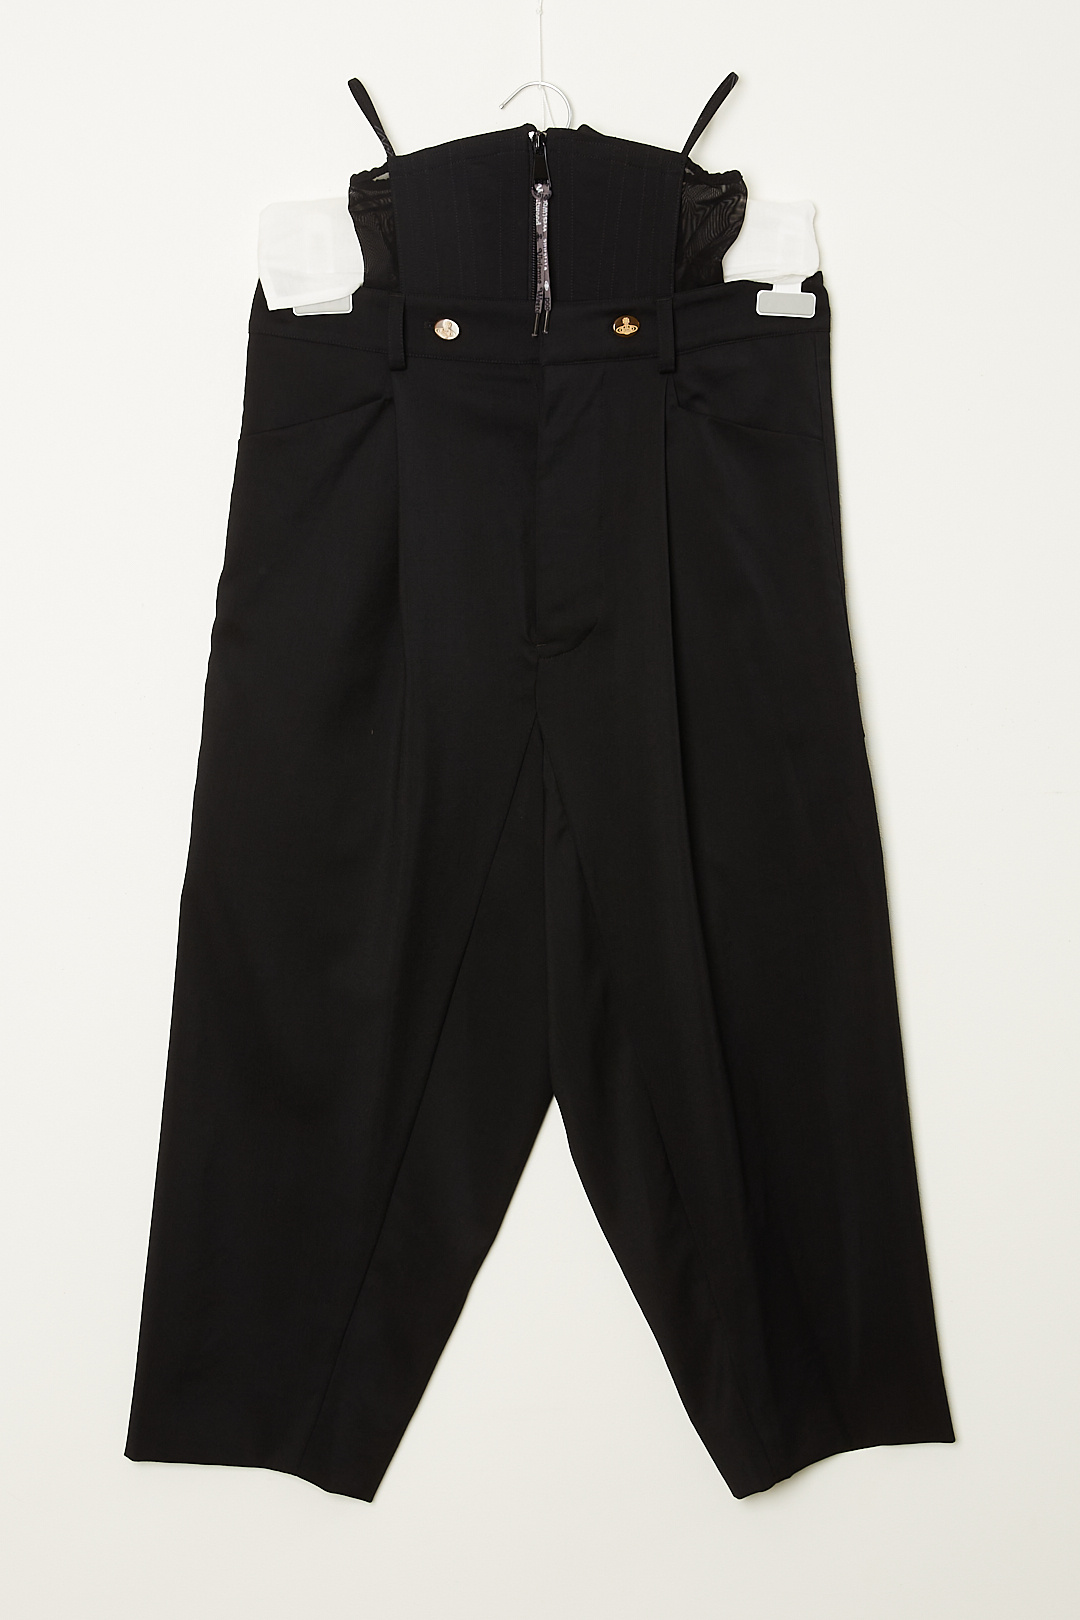 Vivienne Westwood - Macca corset trousers